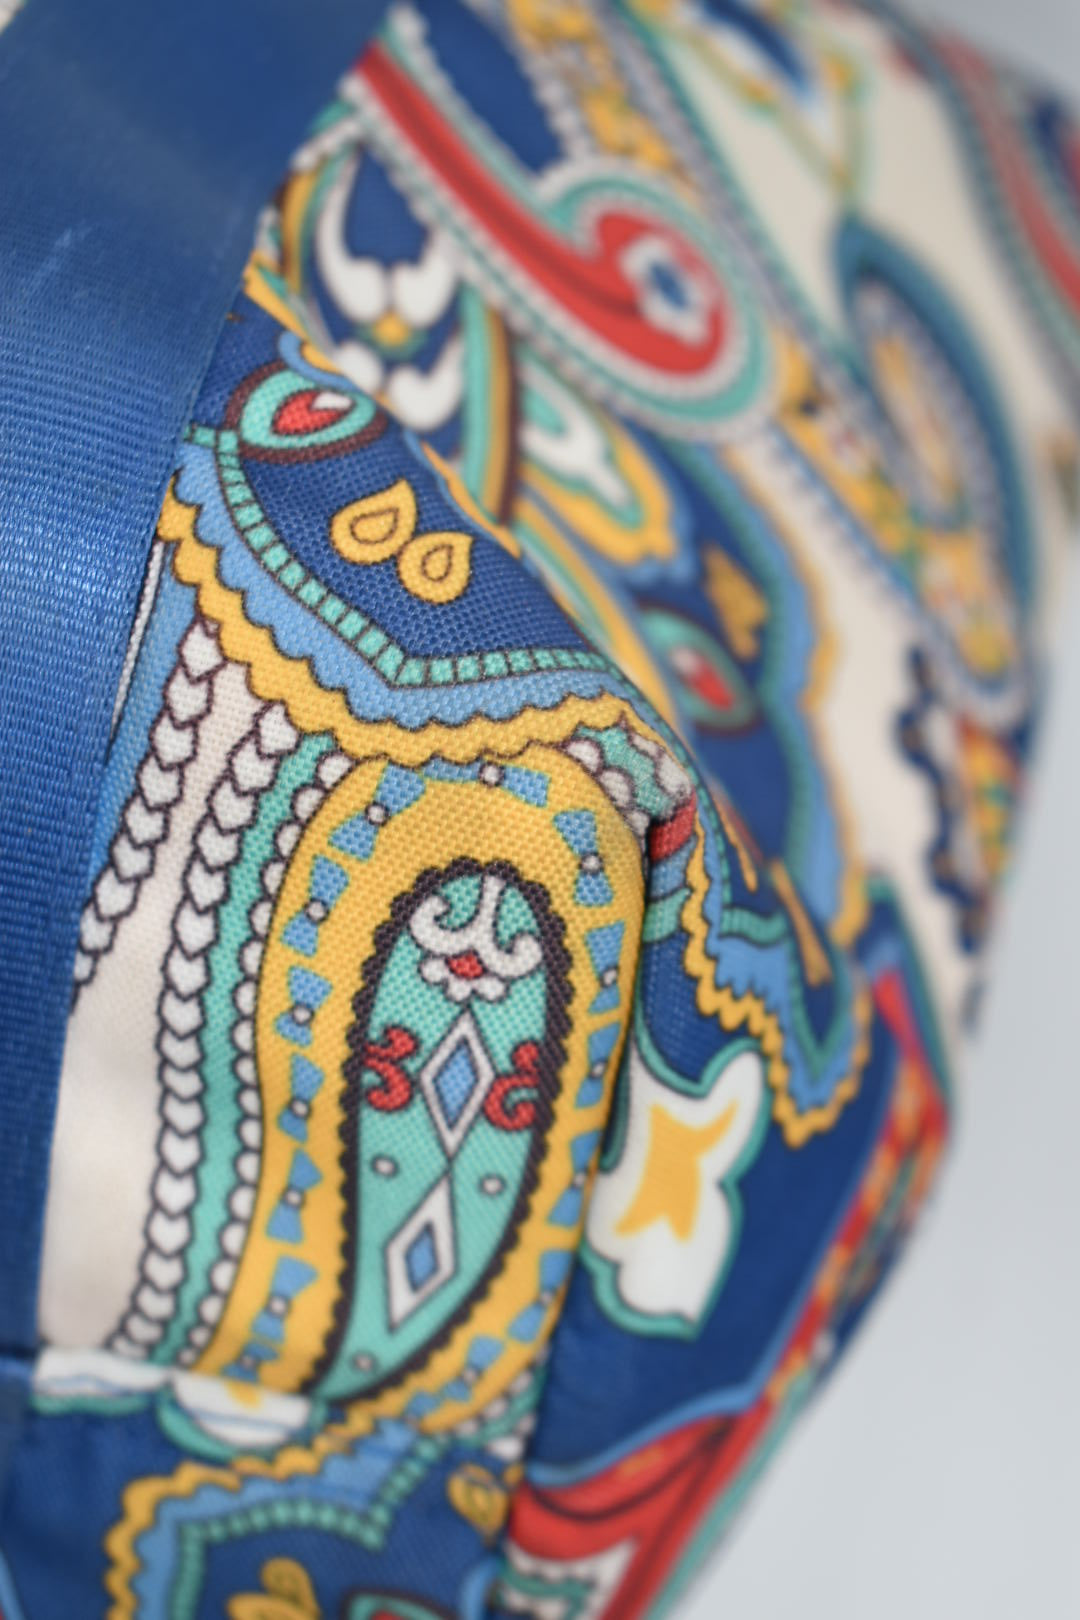 Vera Bradley Color Tote Bag in "Marina Paisley" Pattern